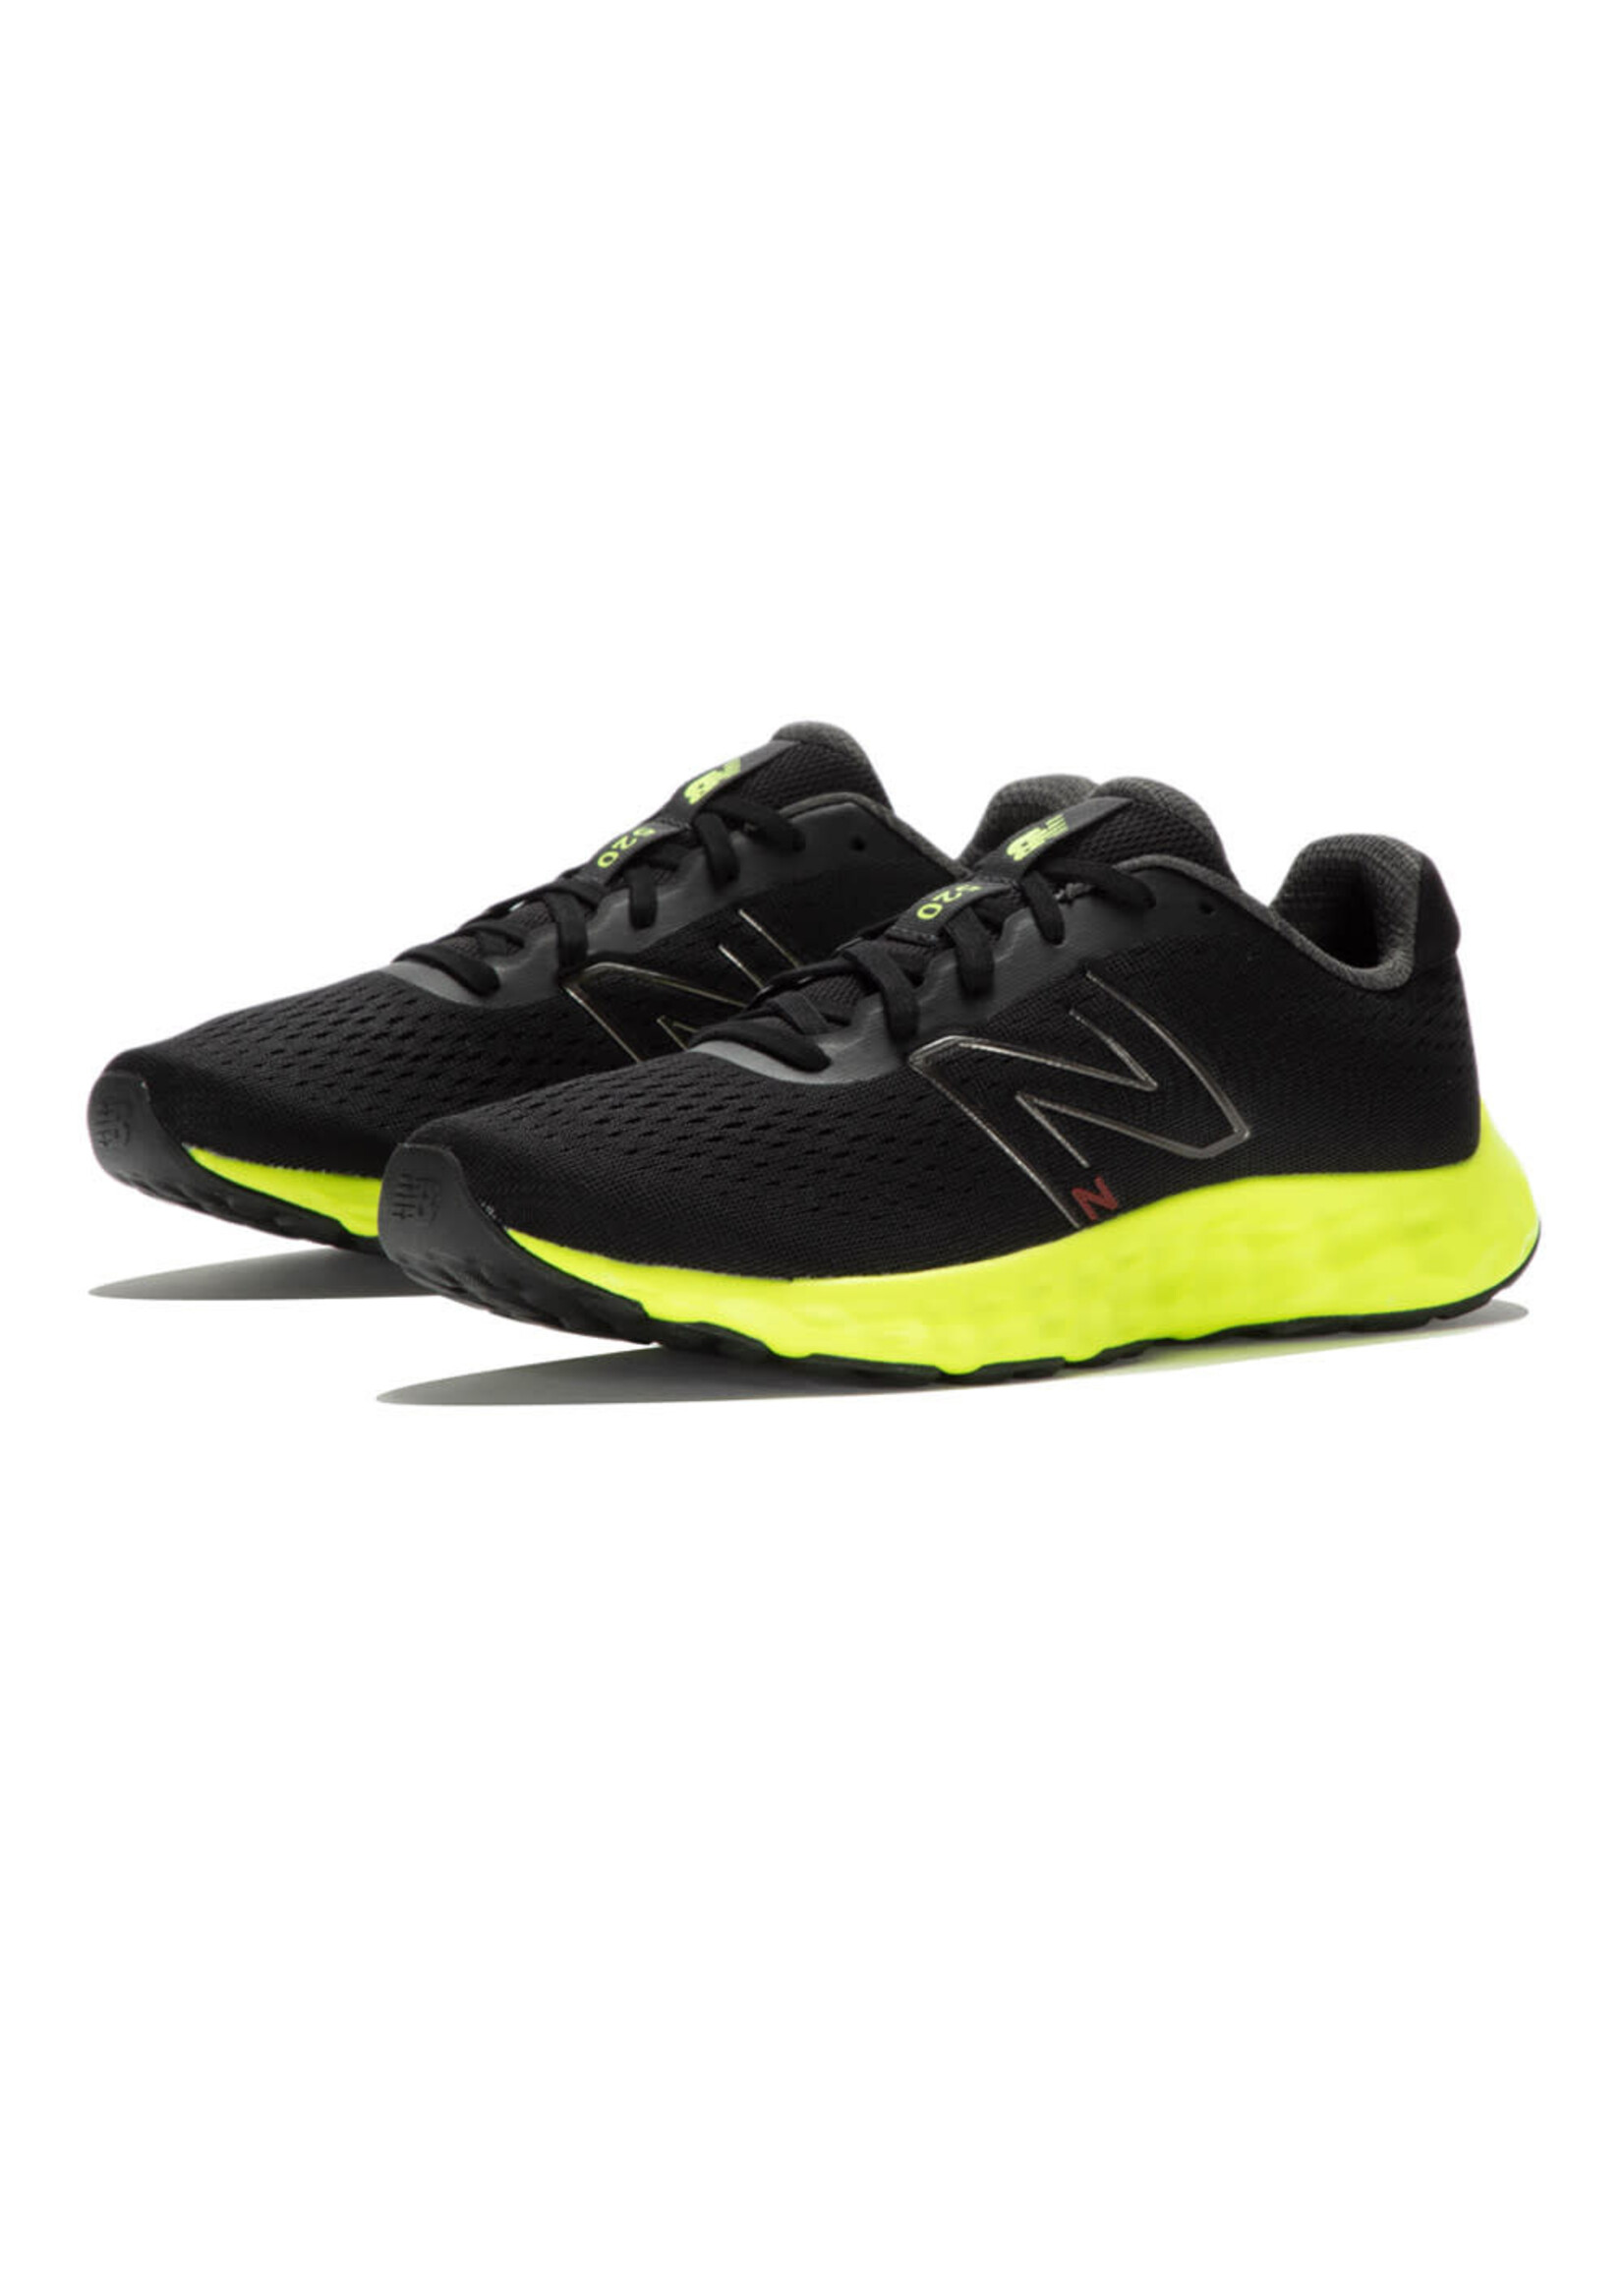 New Balance New Balance 520 v8 Mens Running Shoe, Black and Lime